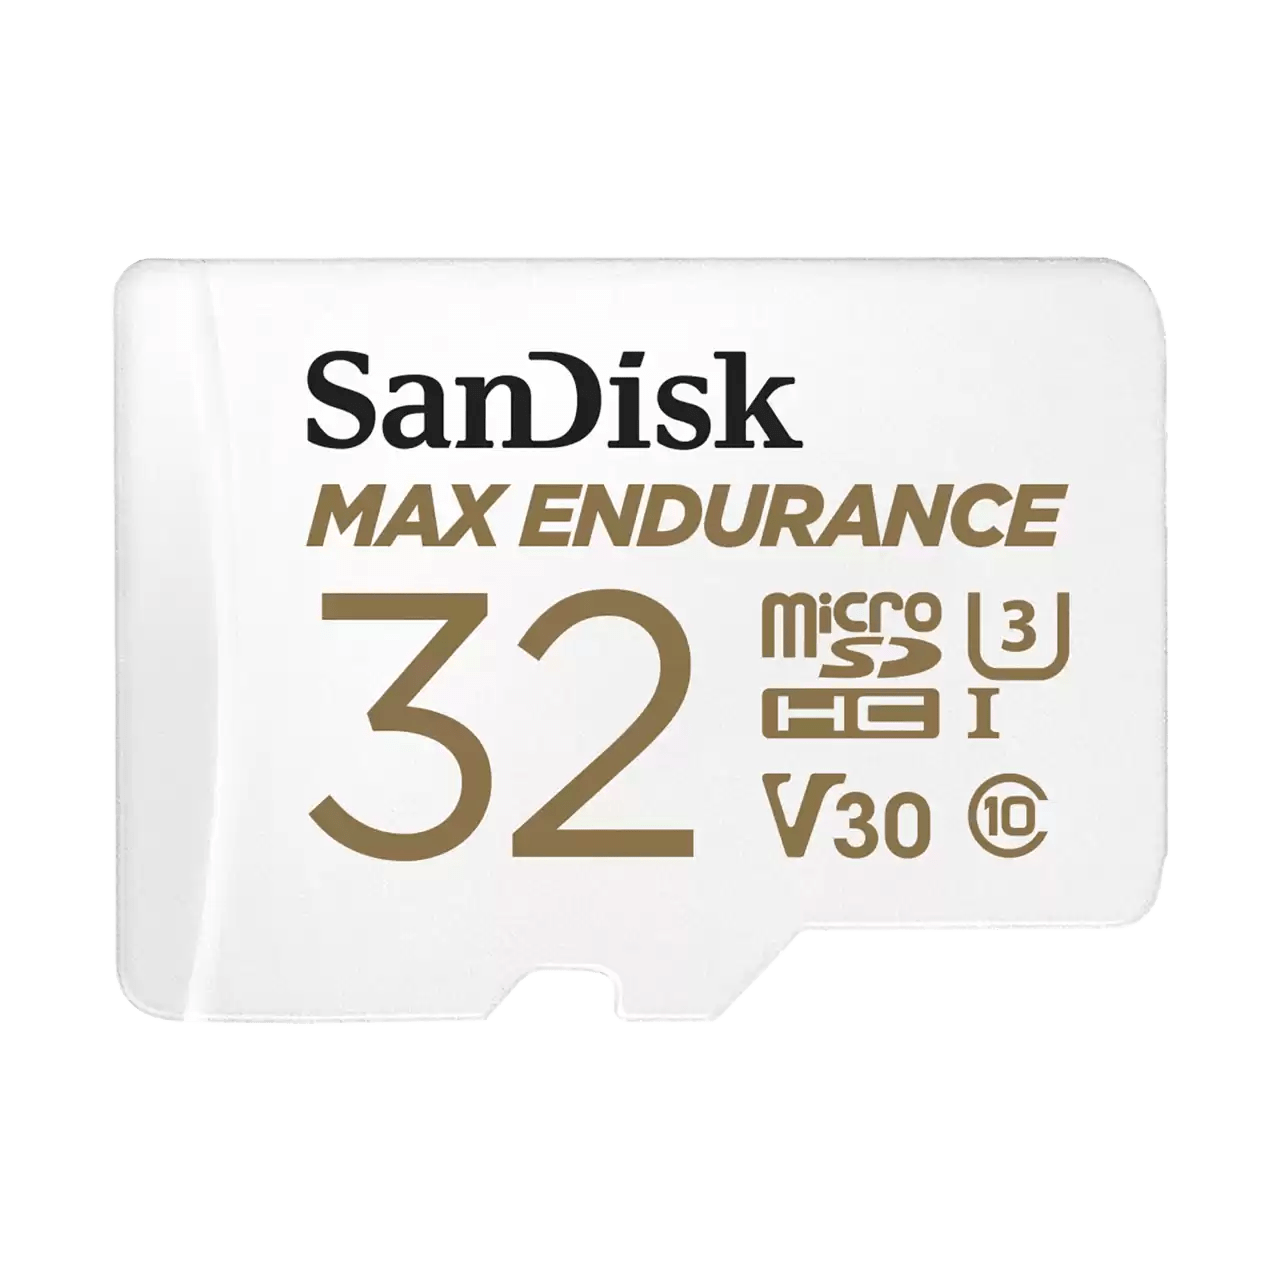 SanDisk Max Endurance 32GB V30 U3 C10 UHS - I microSDHC 記憶卡 (SDSQQVR - 032G - GN6IA) - Fever Electrics 電器熱網購平台